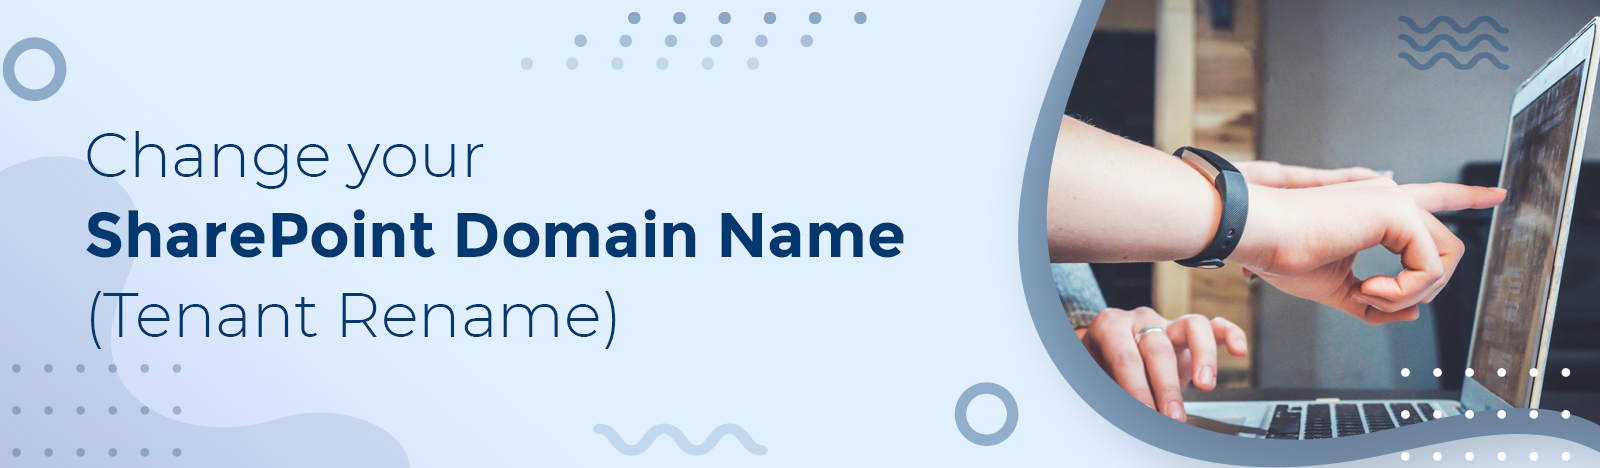 Change SharePoint Domain Name (Tenant Rename)